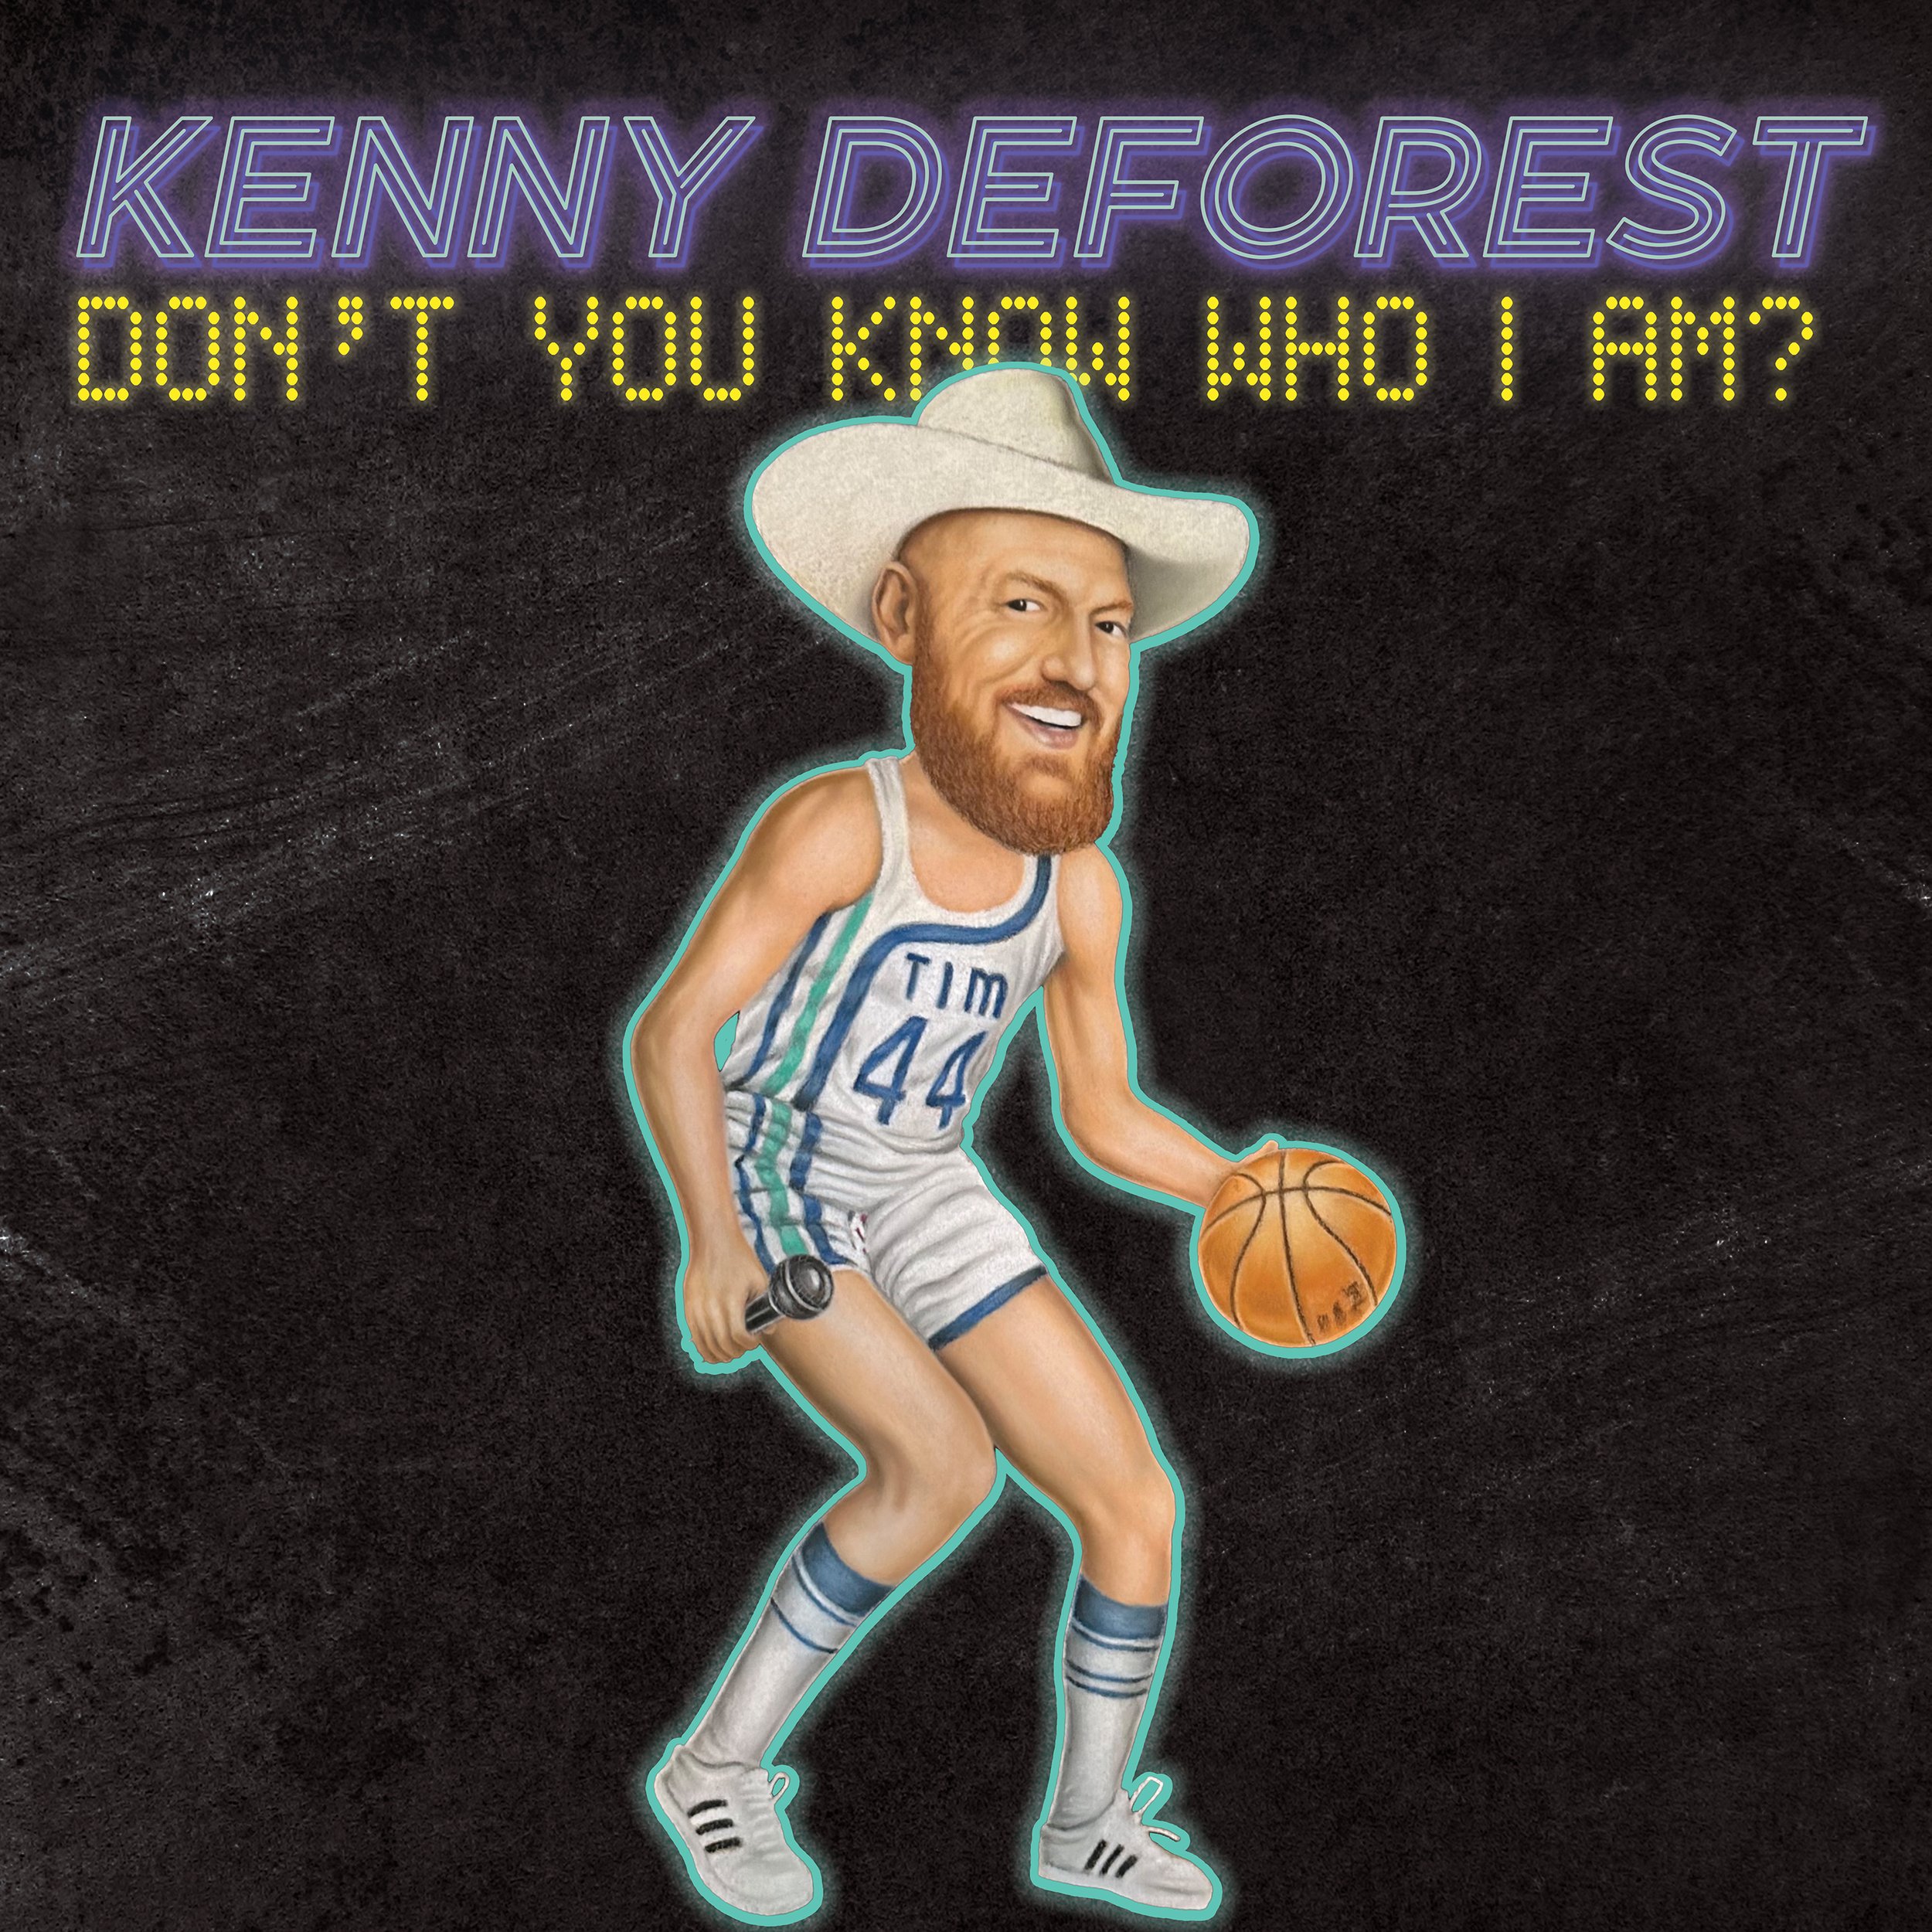 Kenny DeForest - Don't You Know Who I Am Album Art (3000 x 3000 72dpi).jpg